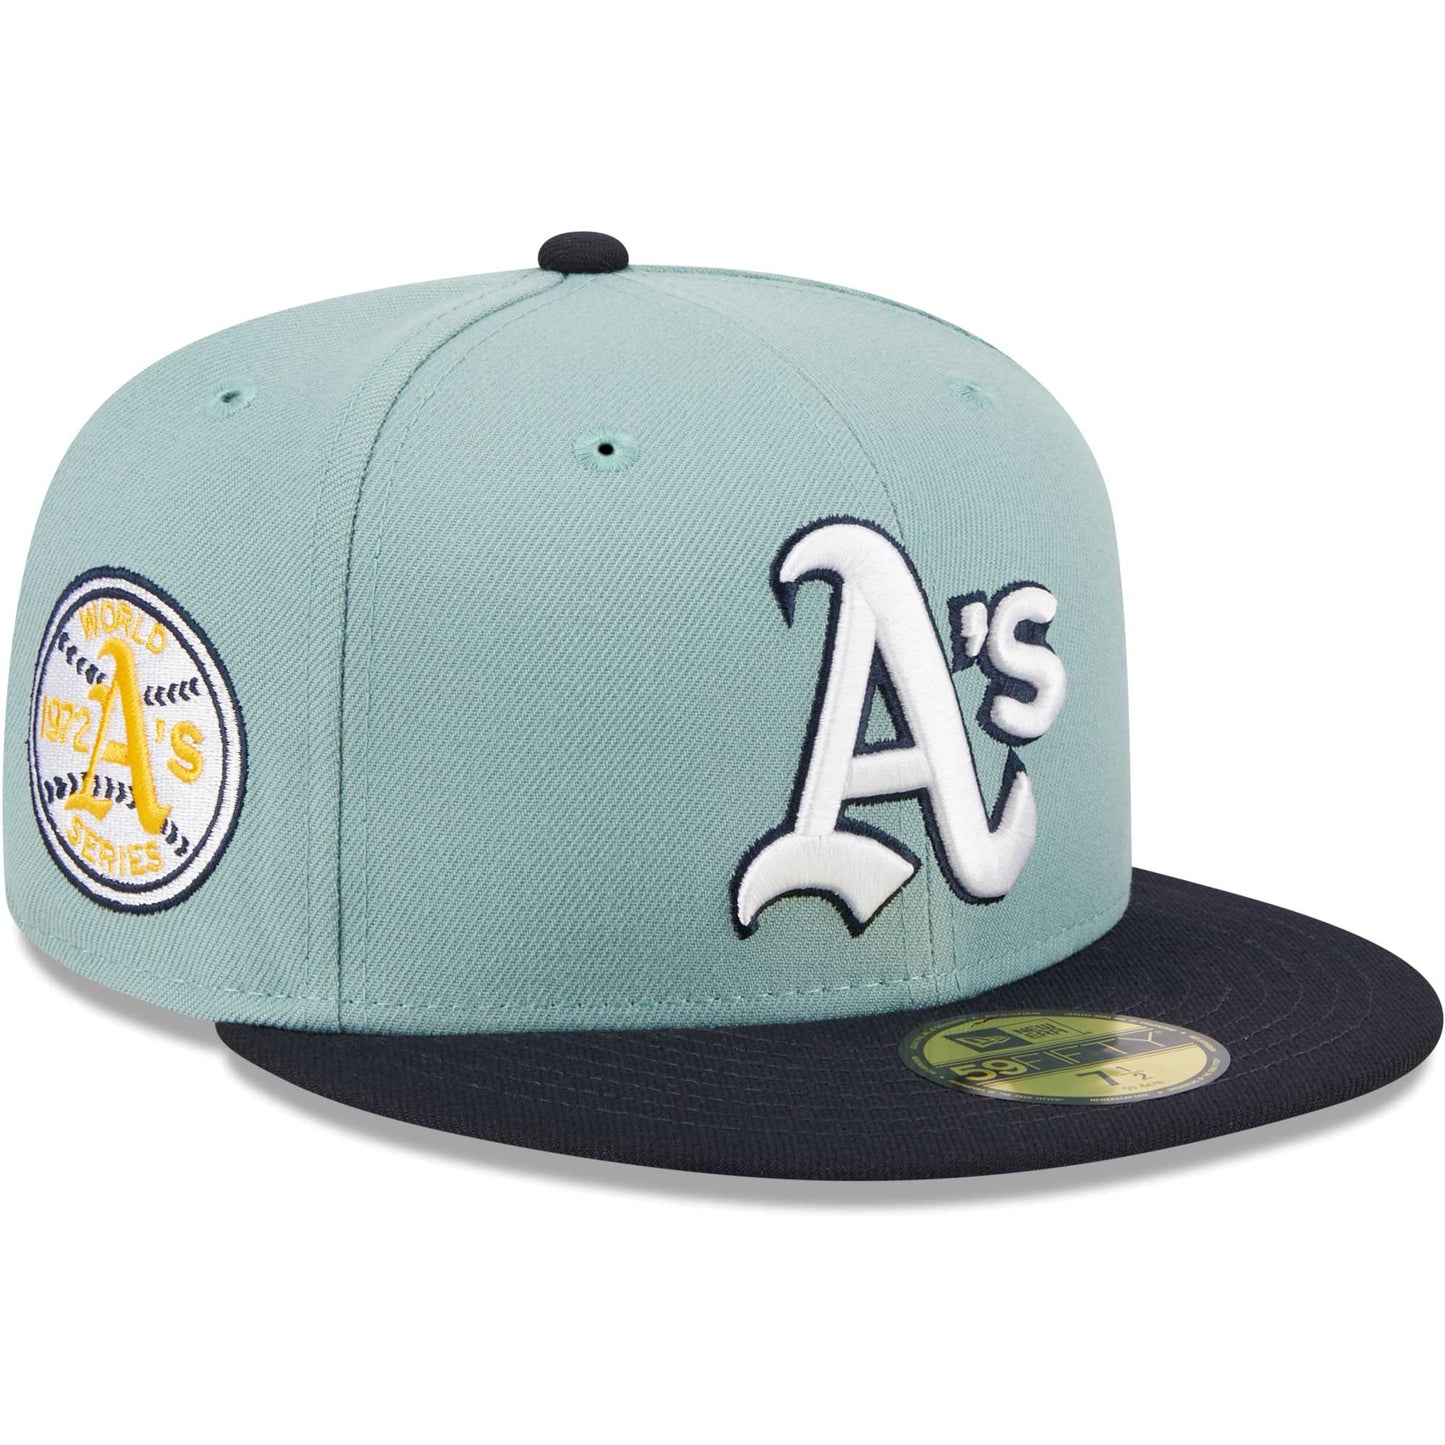 Oakland Athletics New Era Beach Kiss 59FIFTY Fitted Hat - Light Blue/Navy